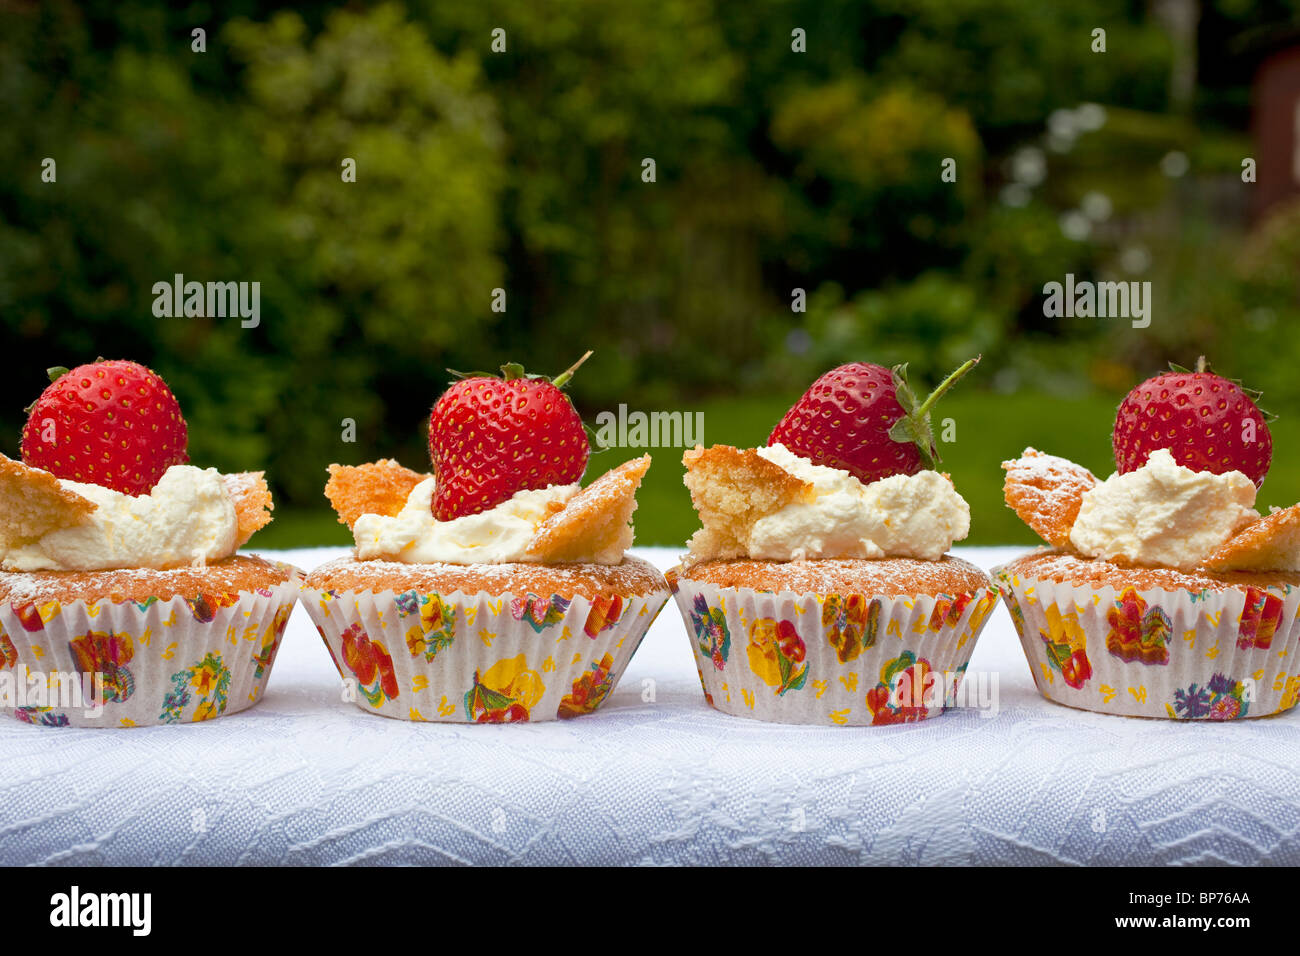 Four fresh cream strawberry buns in a garden setting Stock Photo